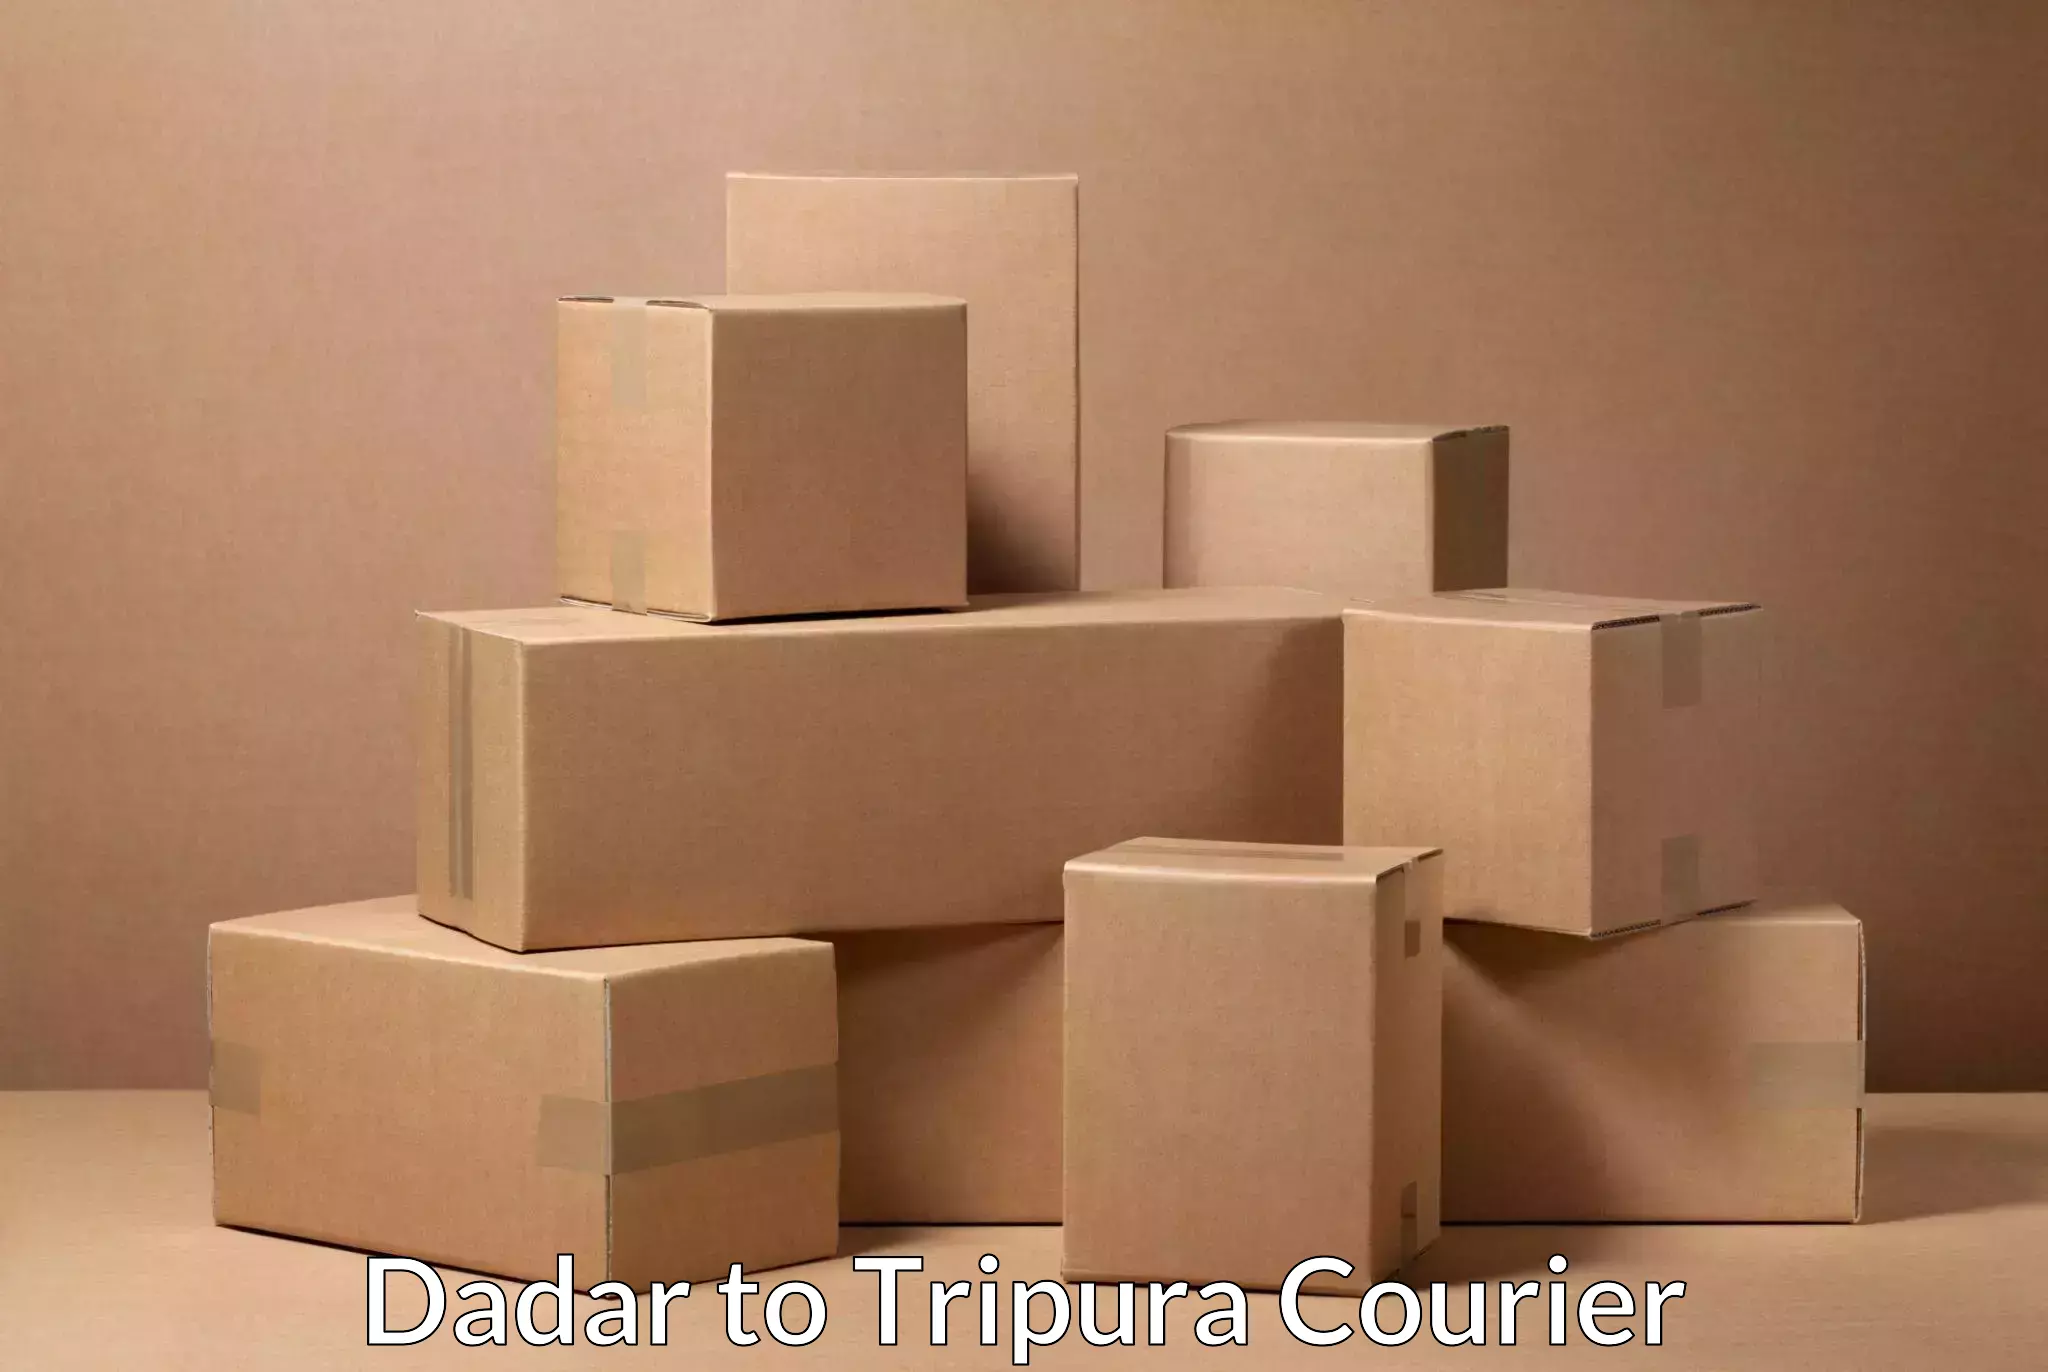 Bulk shipping discounts Dadar to Udaipur Tripura